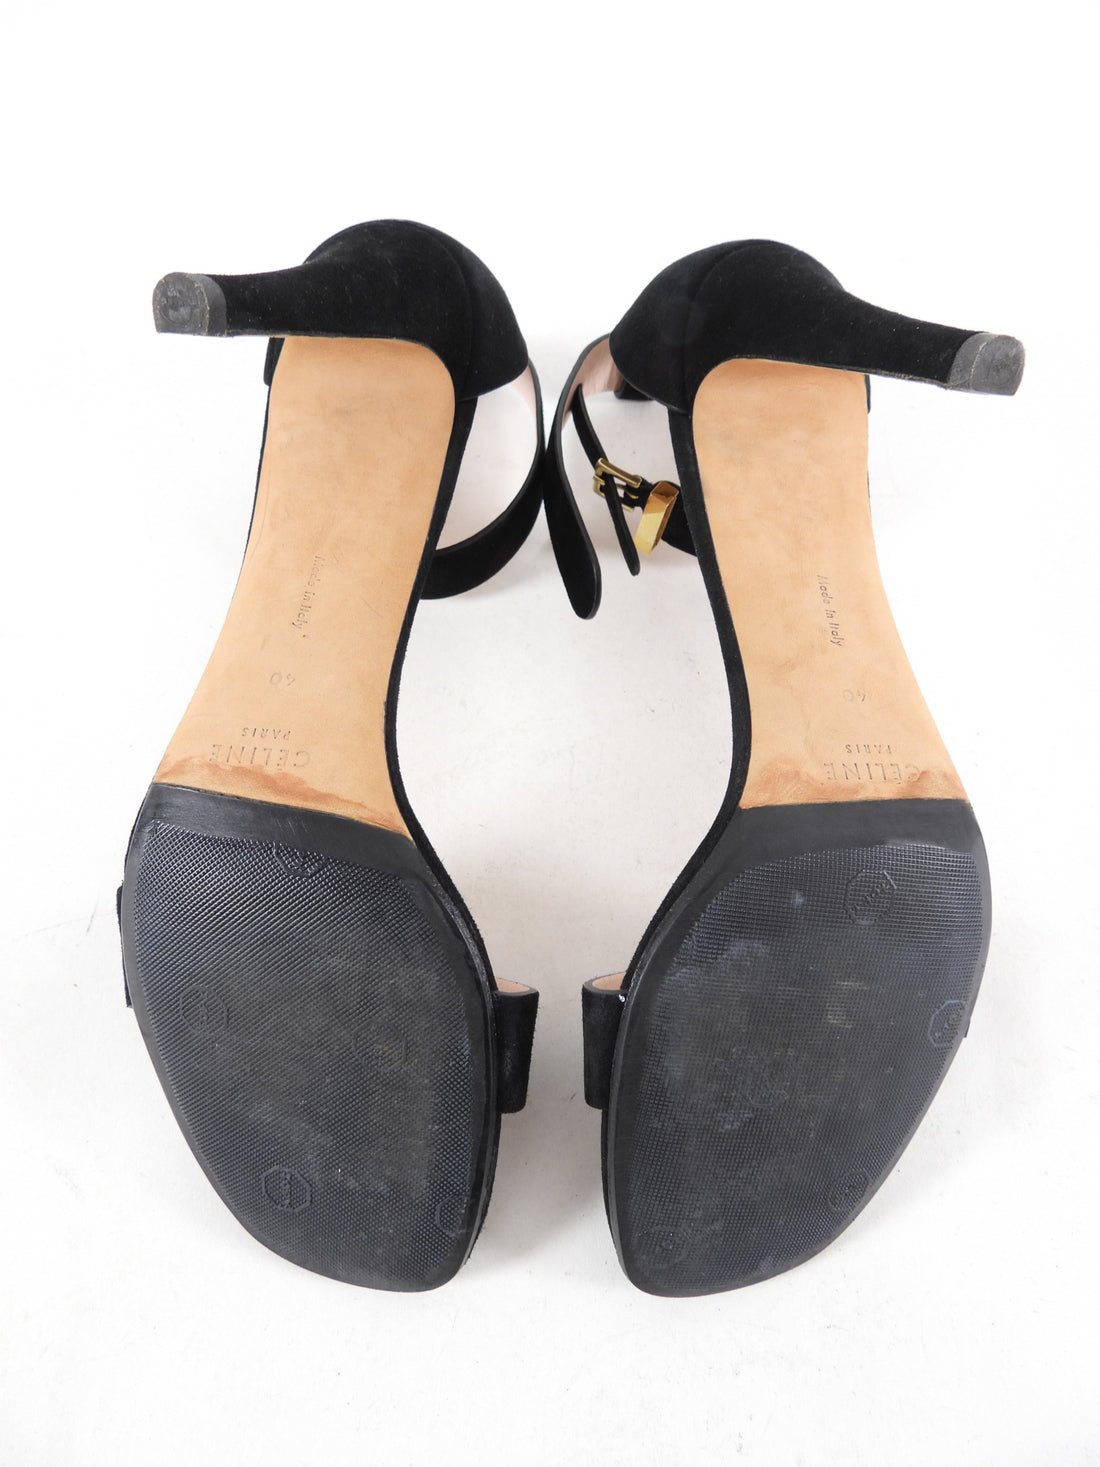 Celine Black Suede 95mm High Heel Sandals - 40 (9.5)